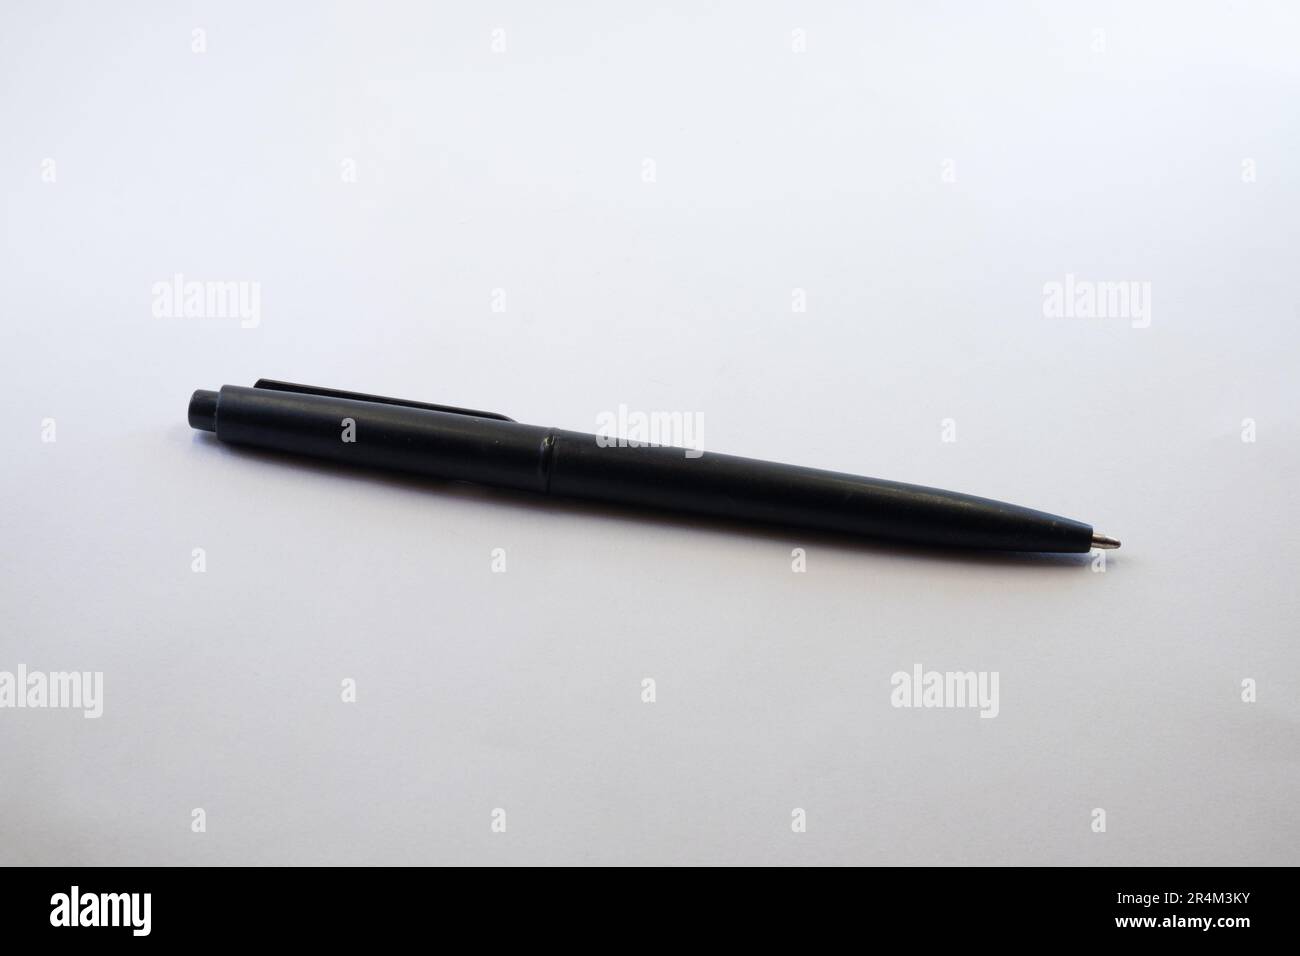 Pen Ink Eraser Isolated on White Background. Erasing concept. Copy